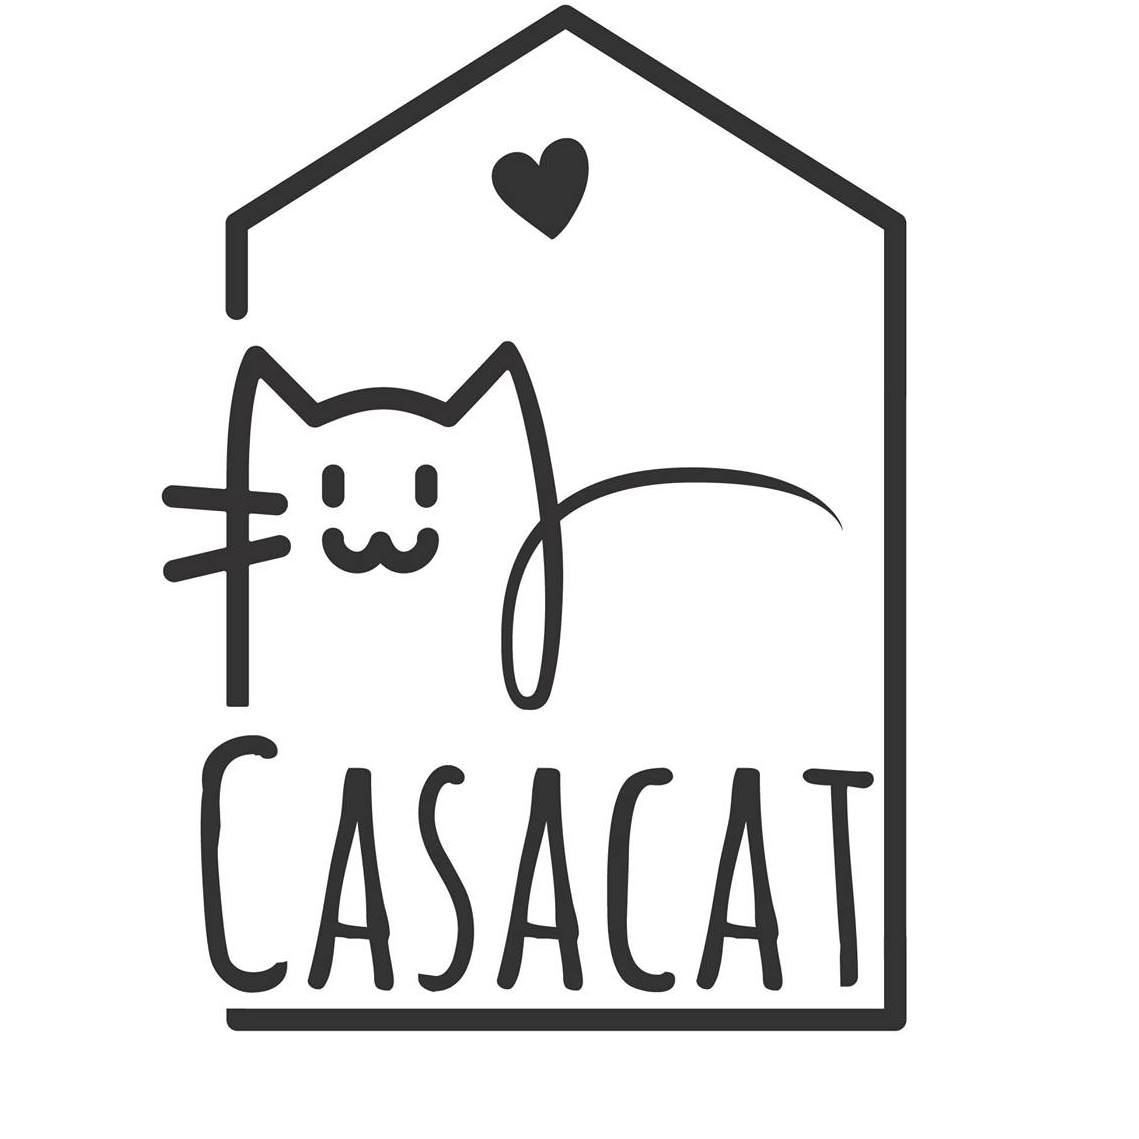 Association Casacat